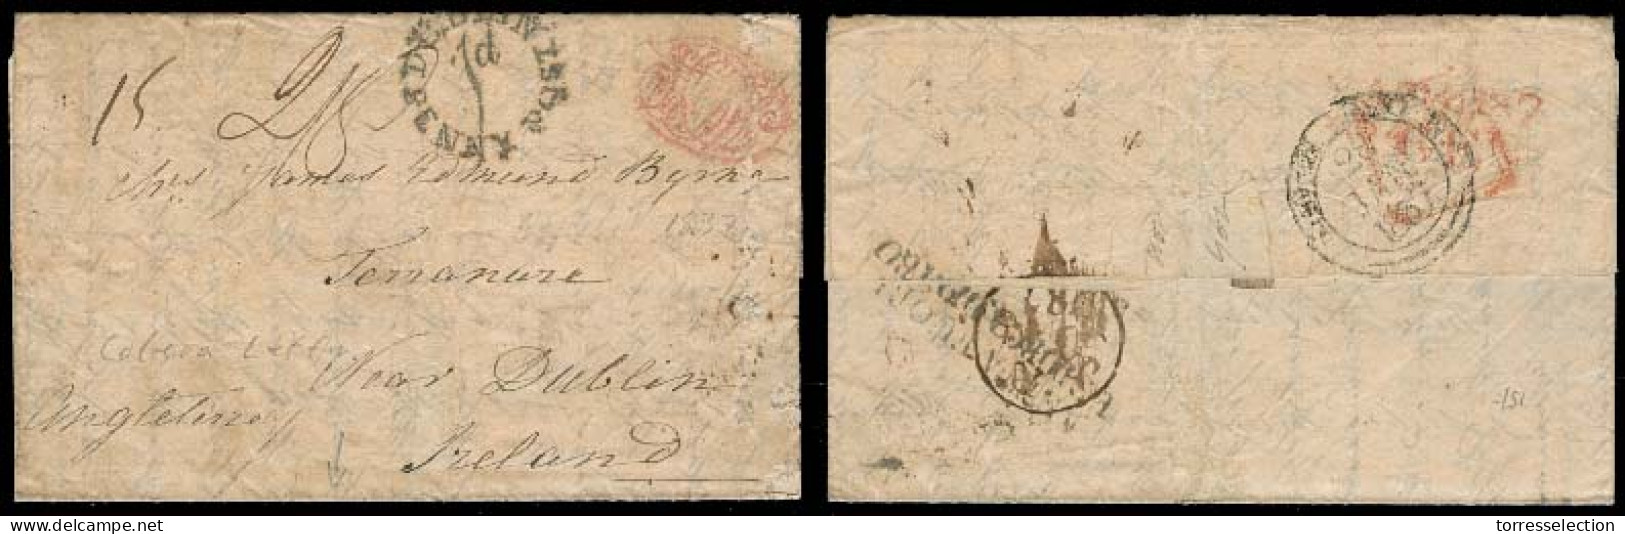 EIRE. 1837. Italy - Ireland. EL Full Text Via Napoli + London (28 Jan 37). Netto Fuoro E Dentro Doble Line Dissinfection - Used Stamps